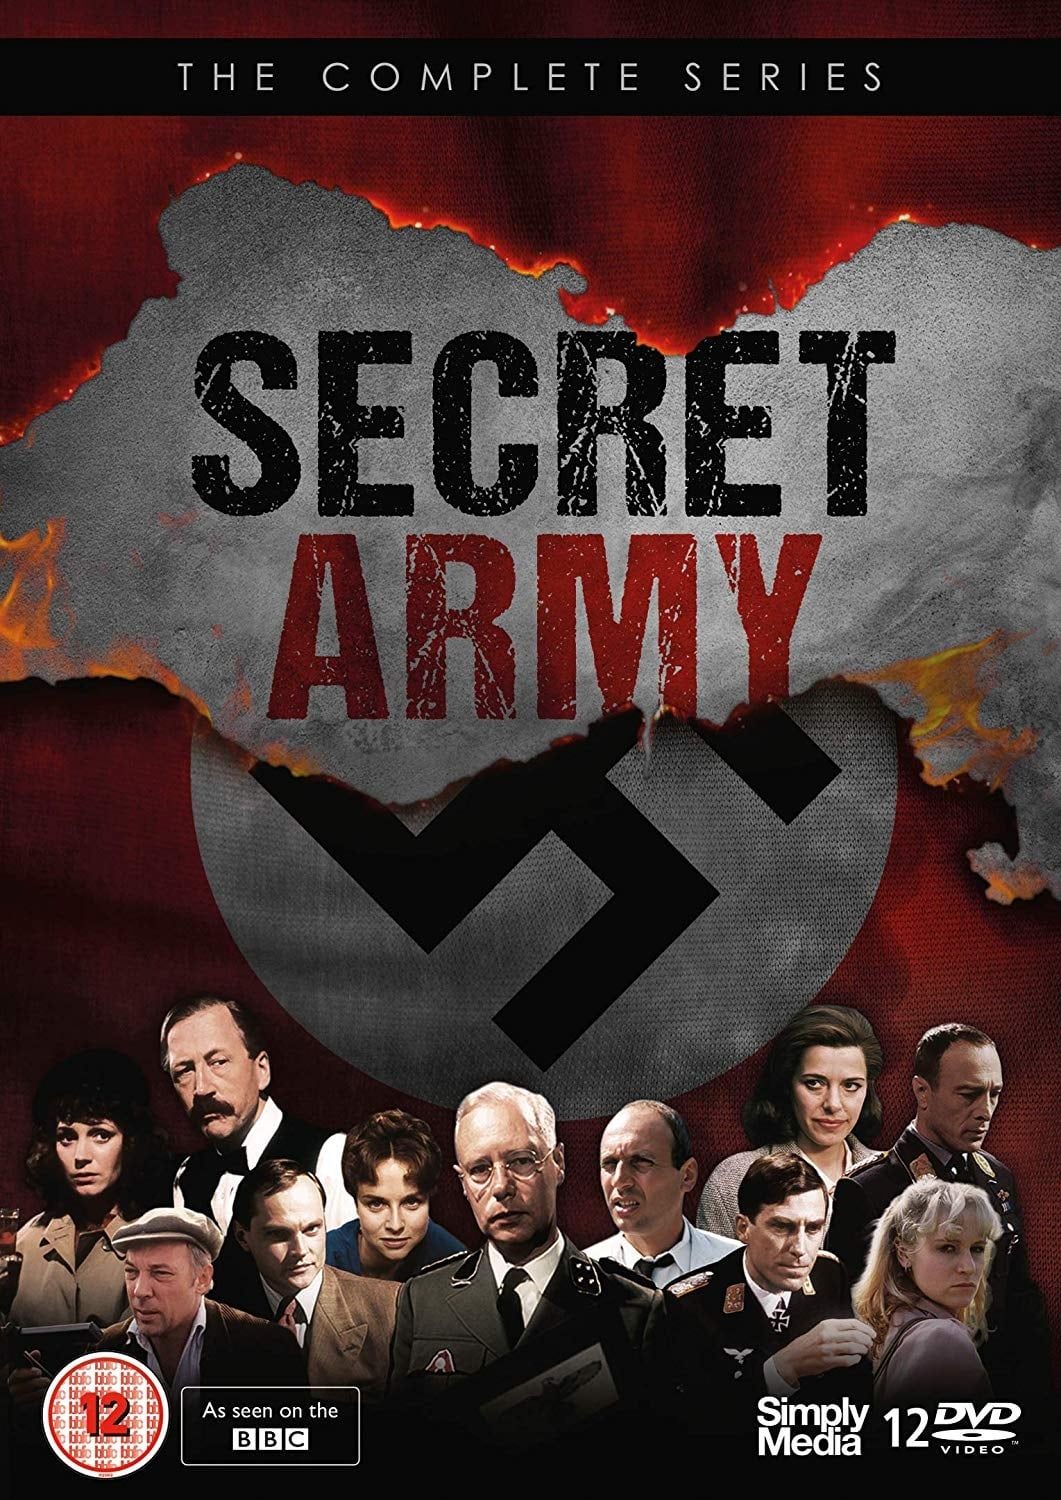 Secret Army (1977)